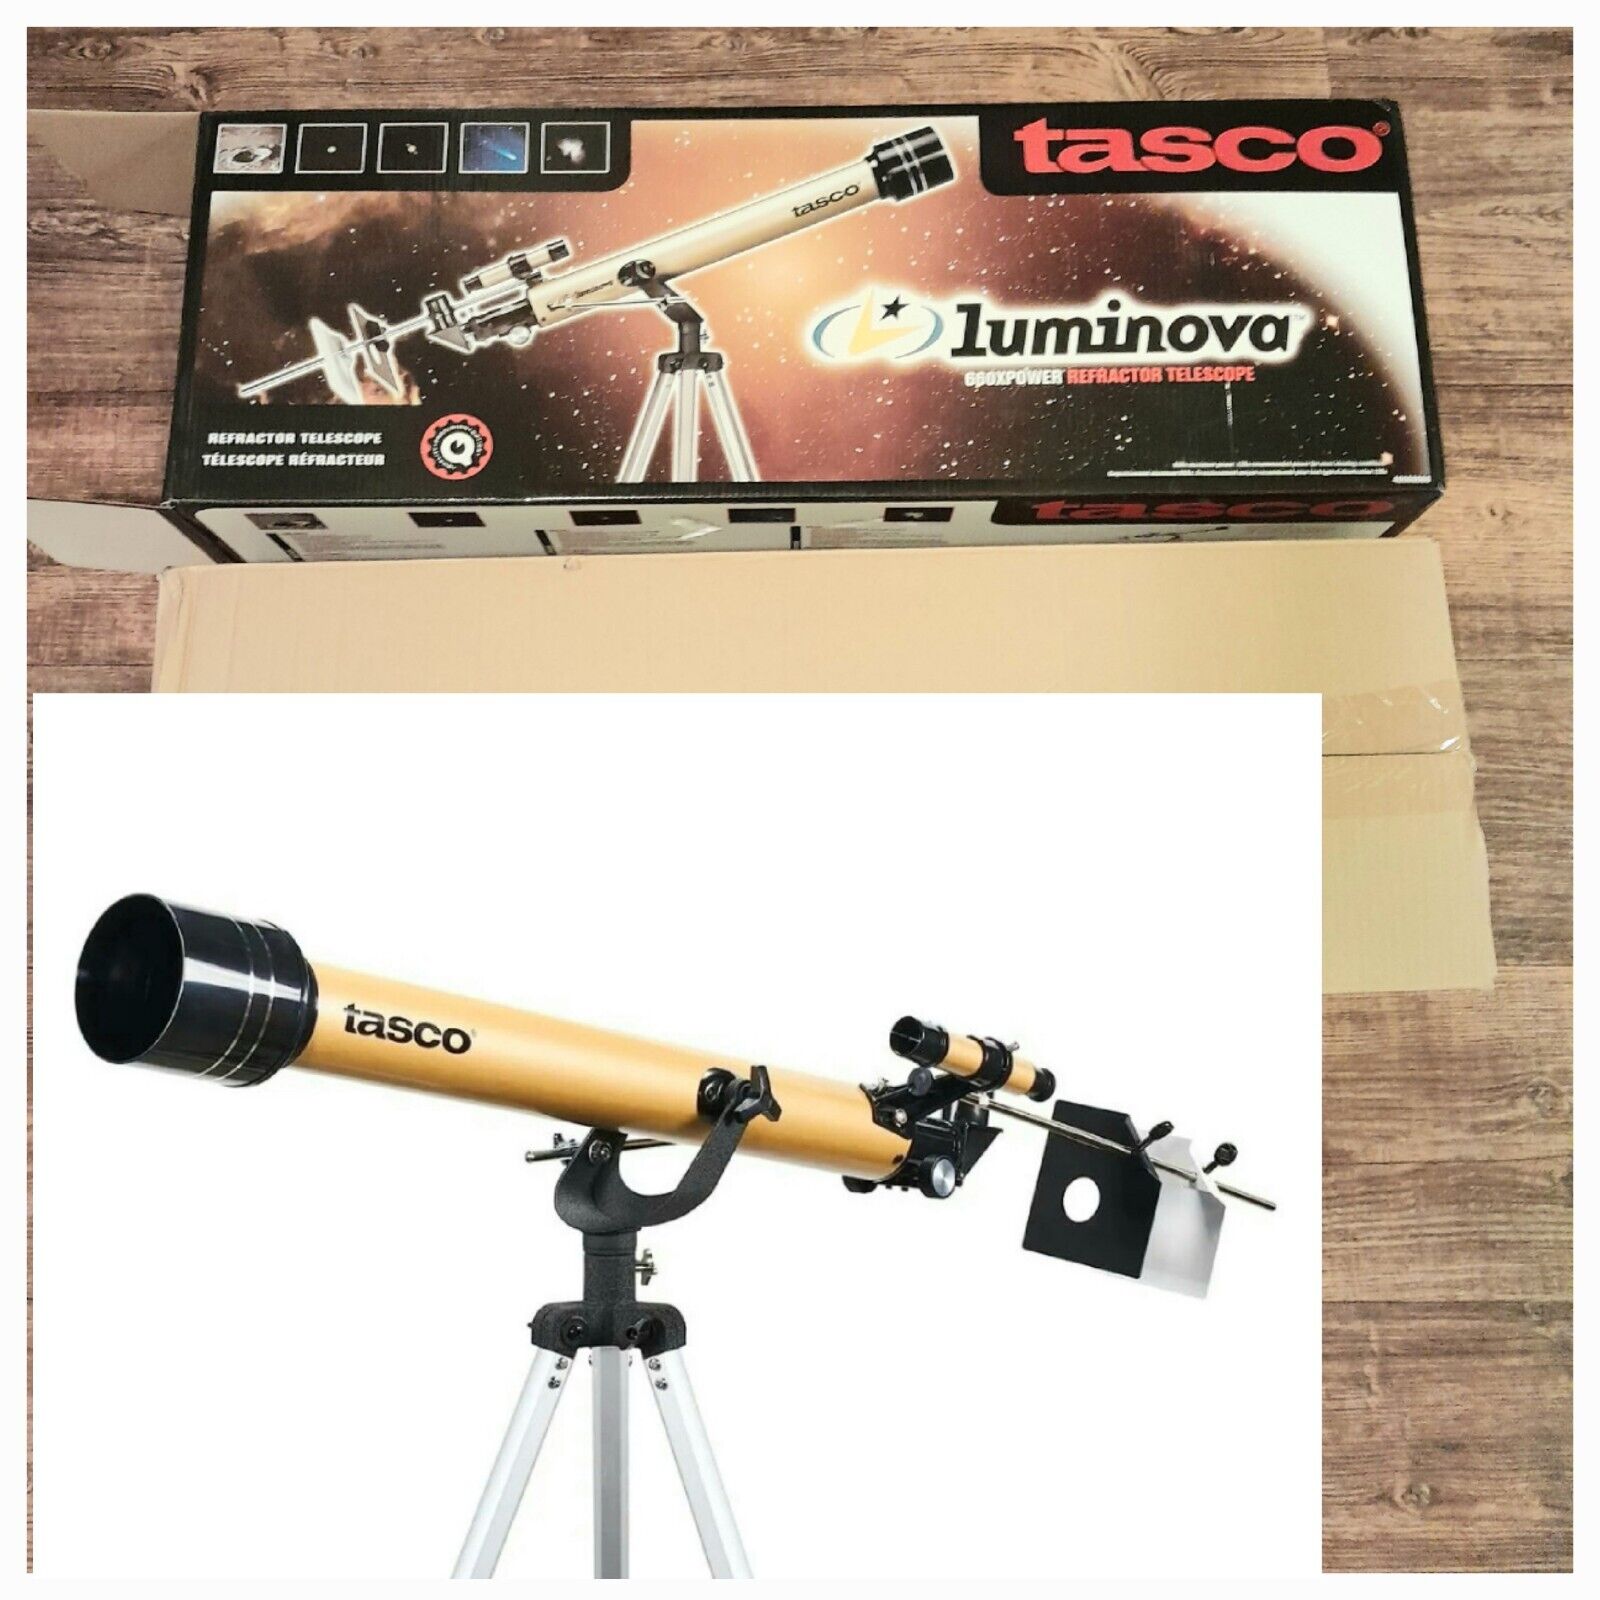 Tasco Luminova 660 x 60mm Refractor Telescope, Tripod, Moon Lens, Barlow  NEW 